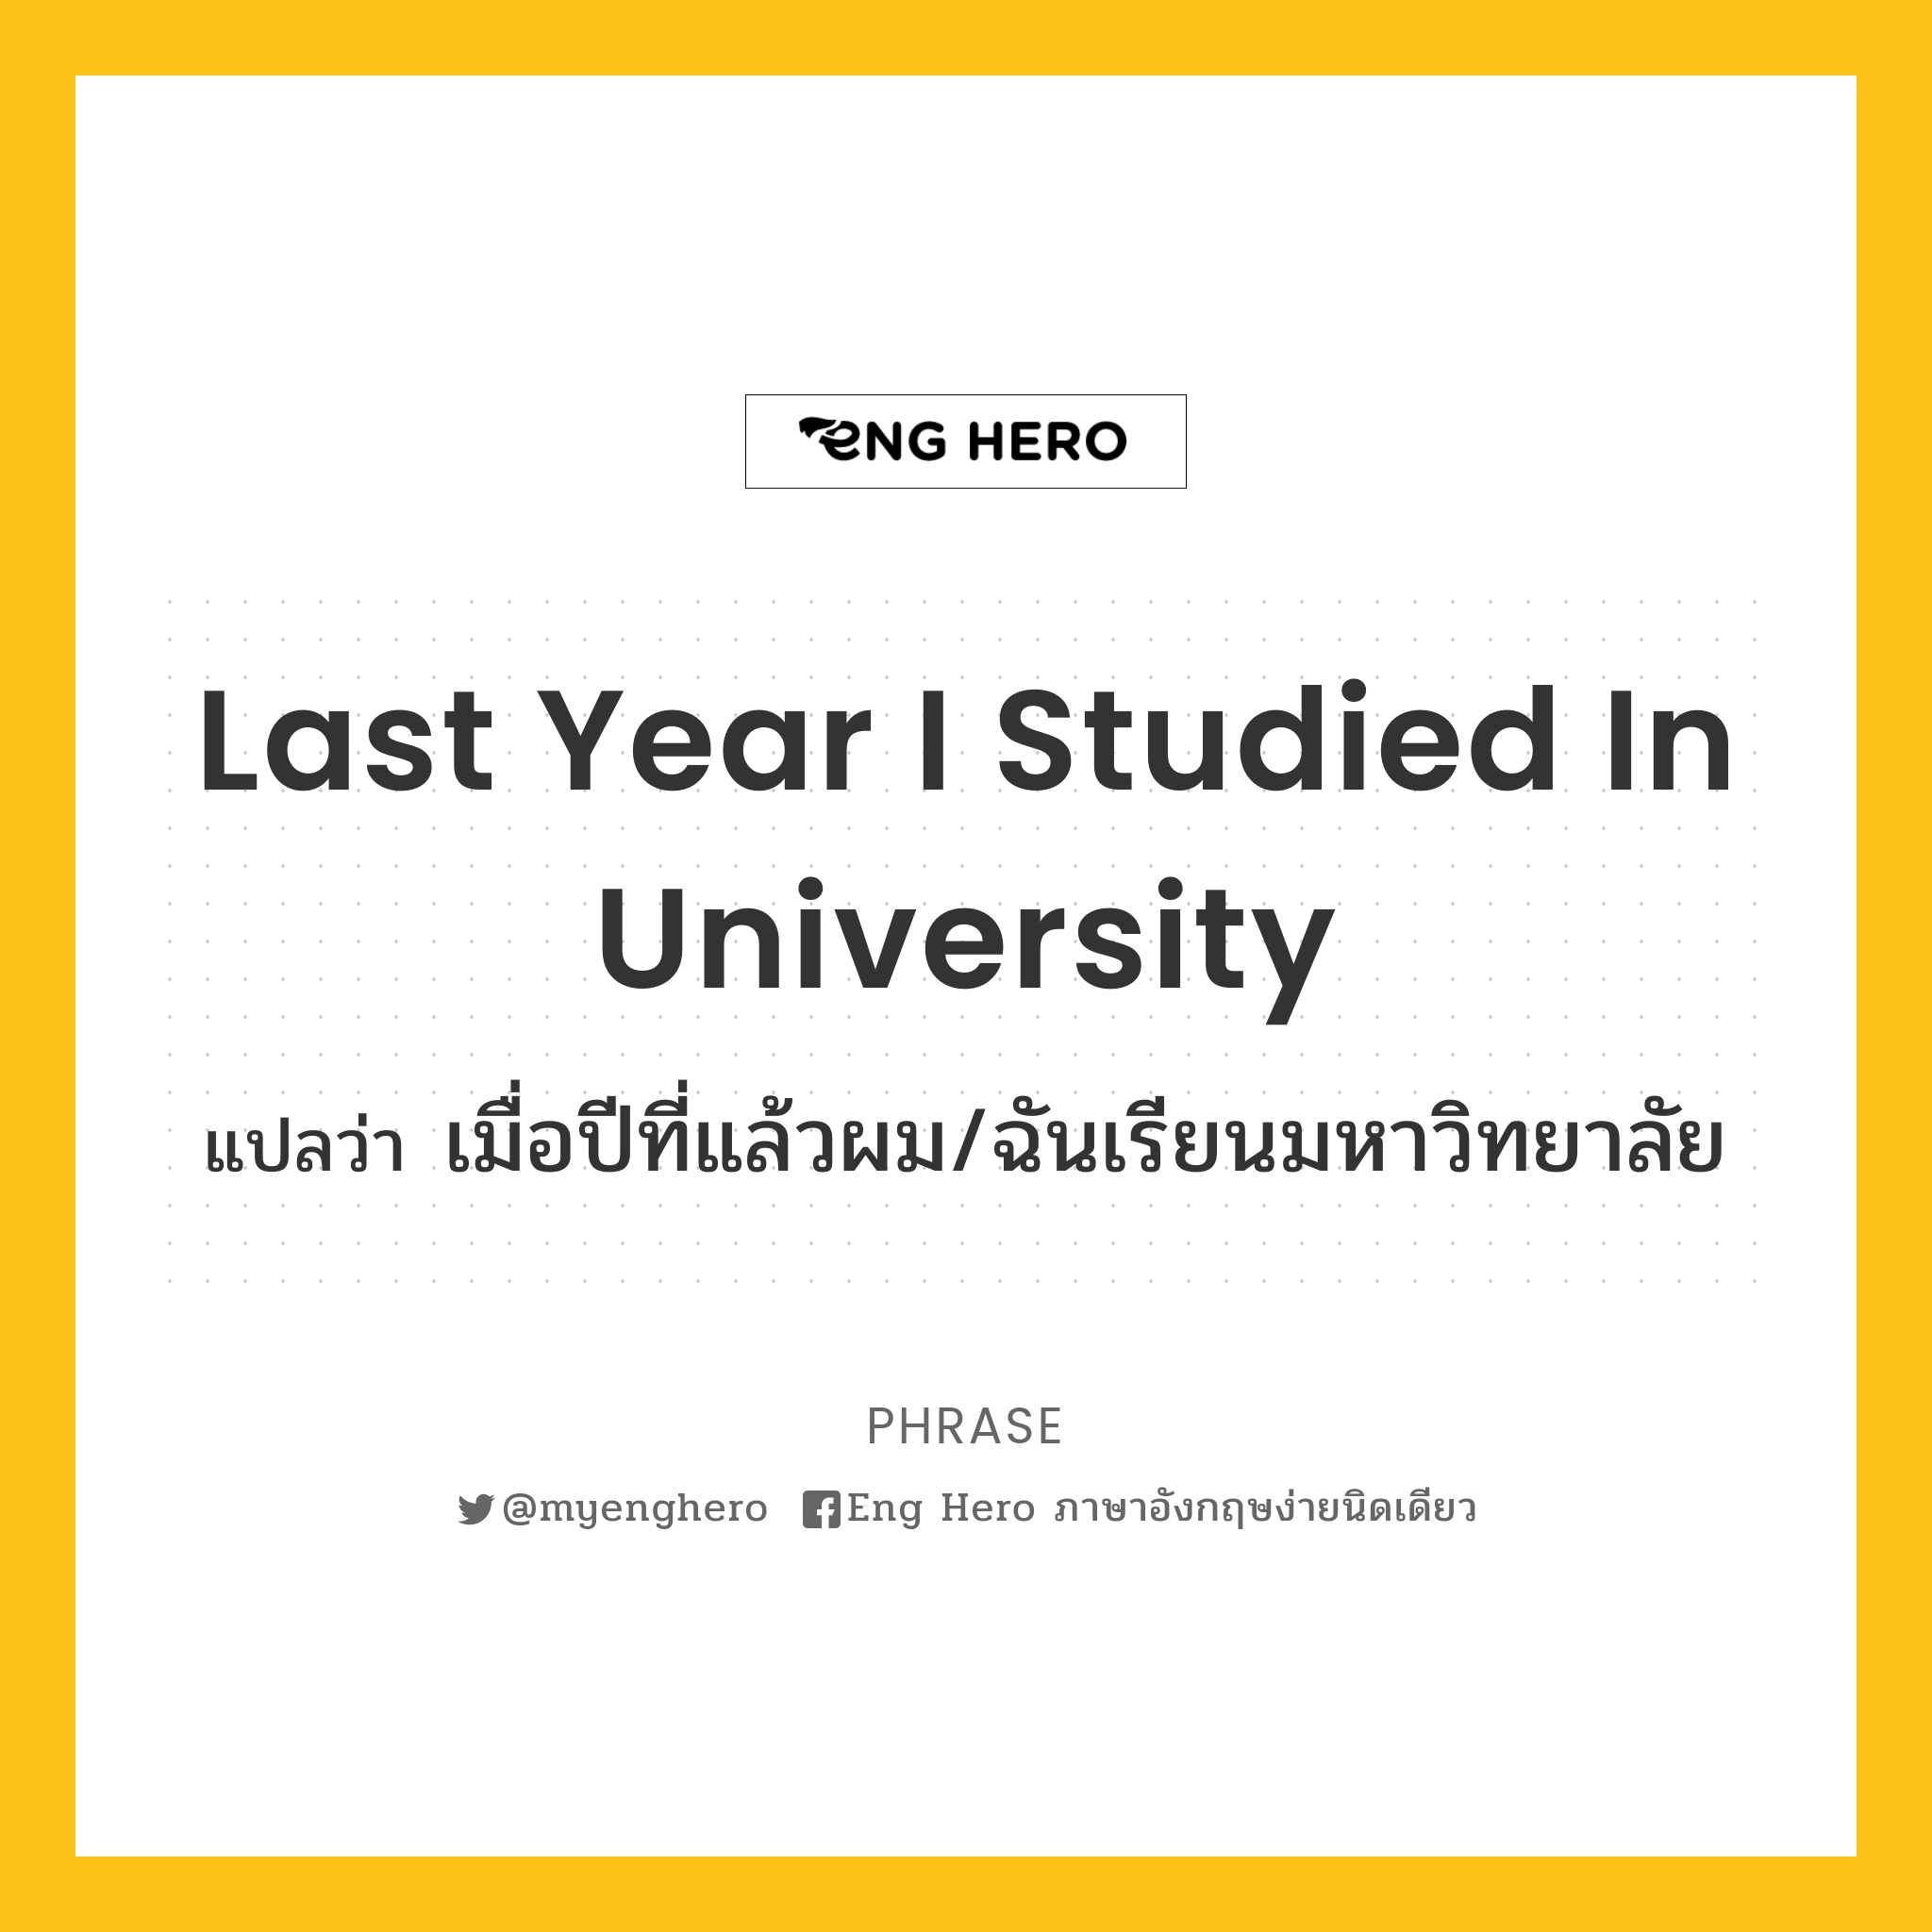 Last year I studied in university